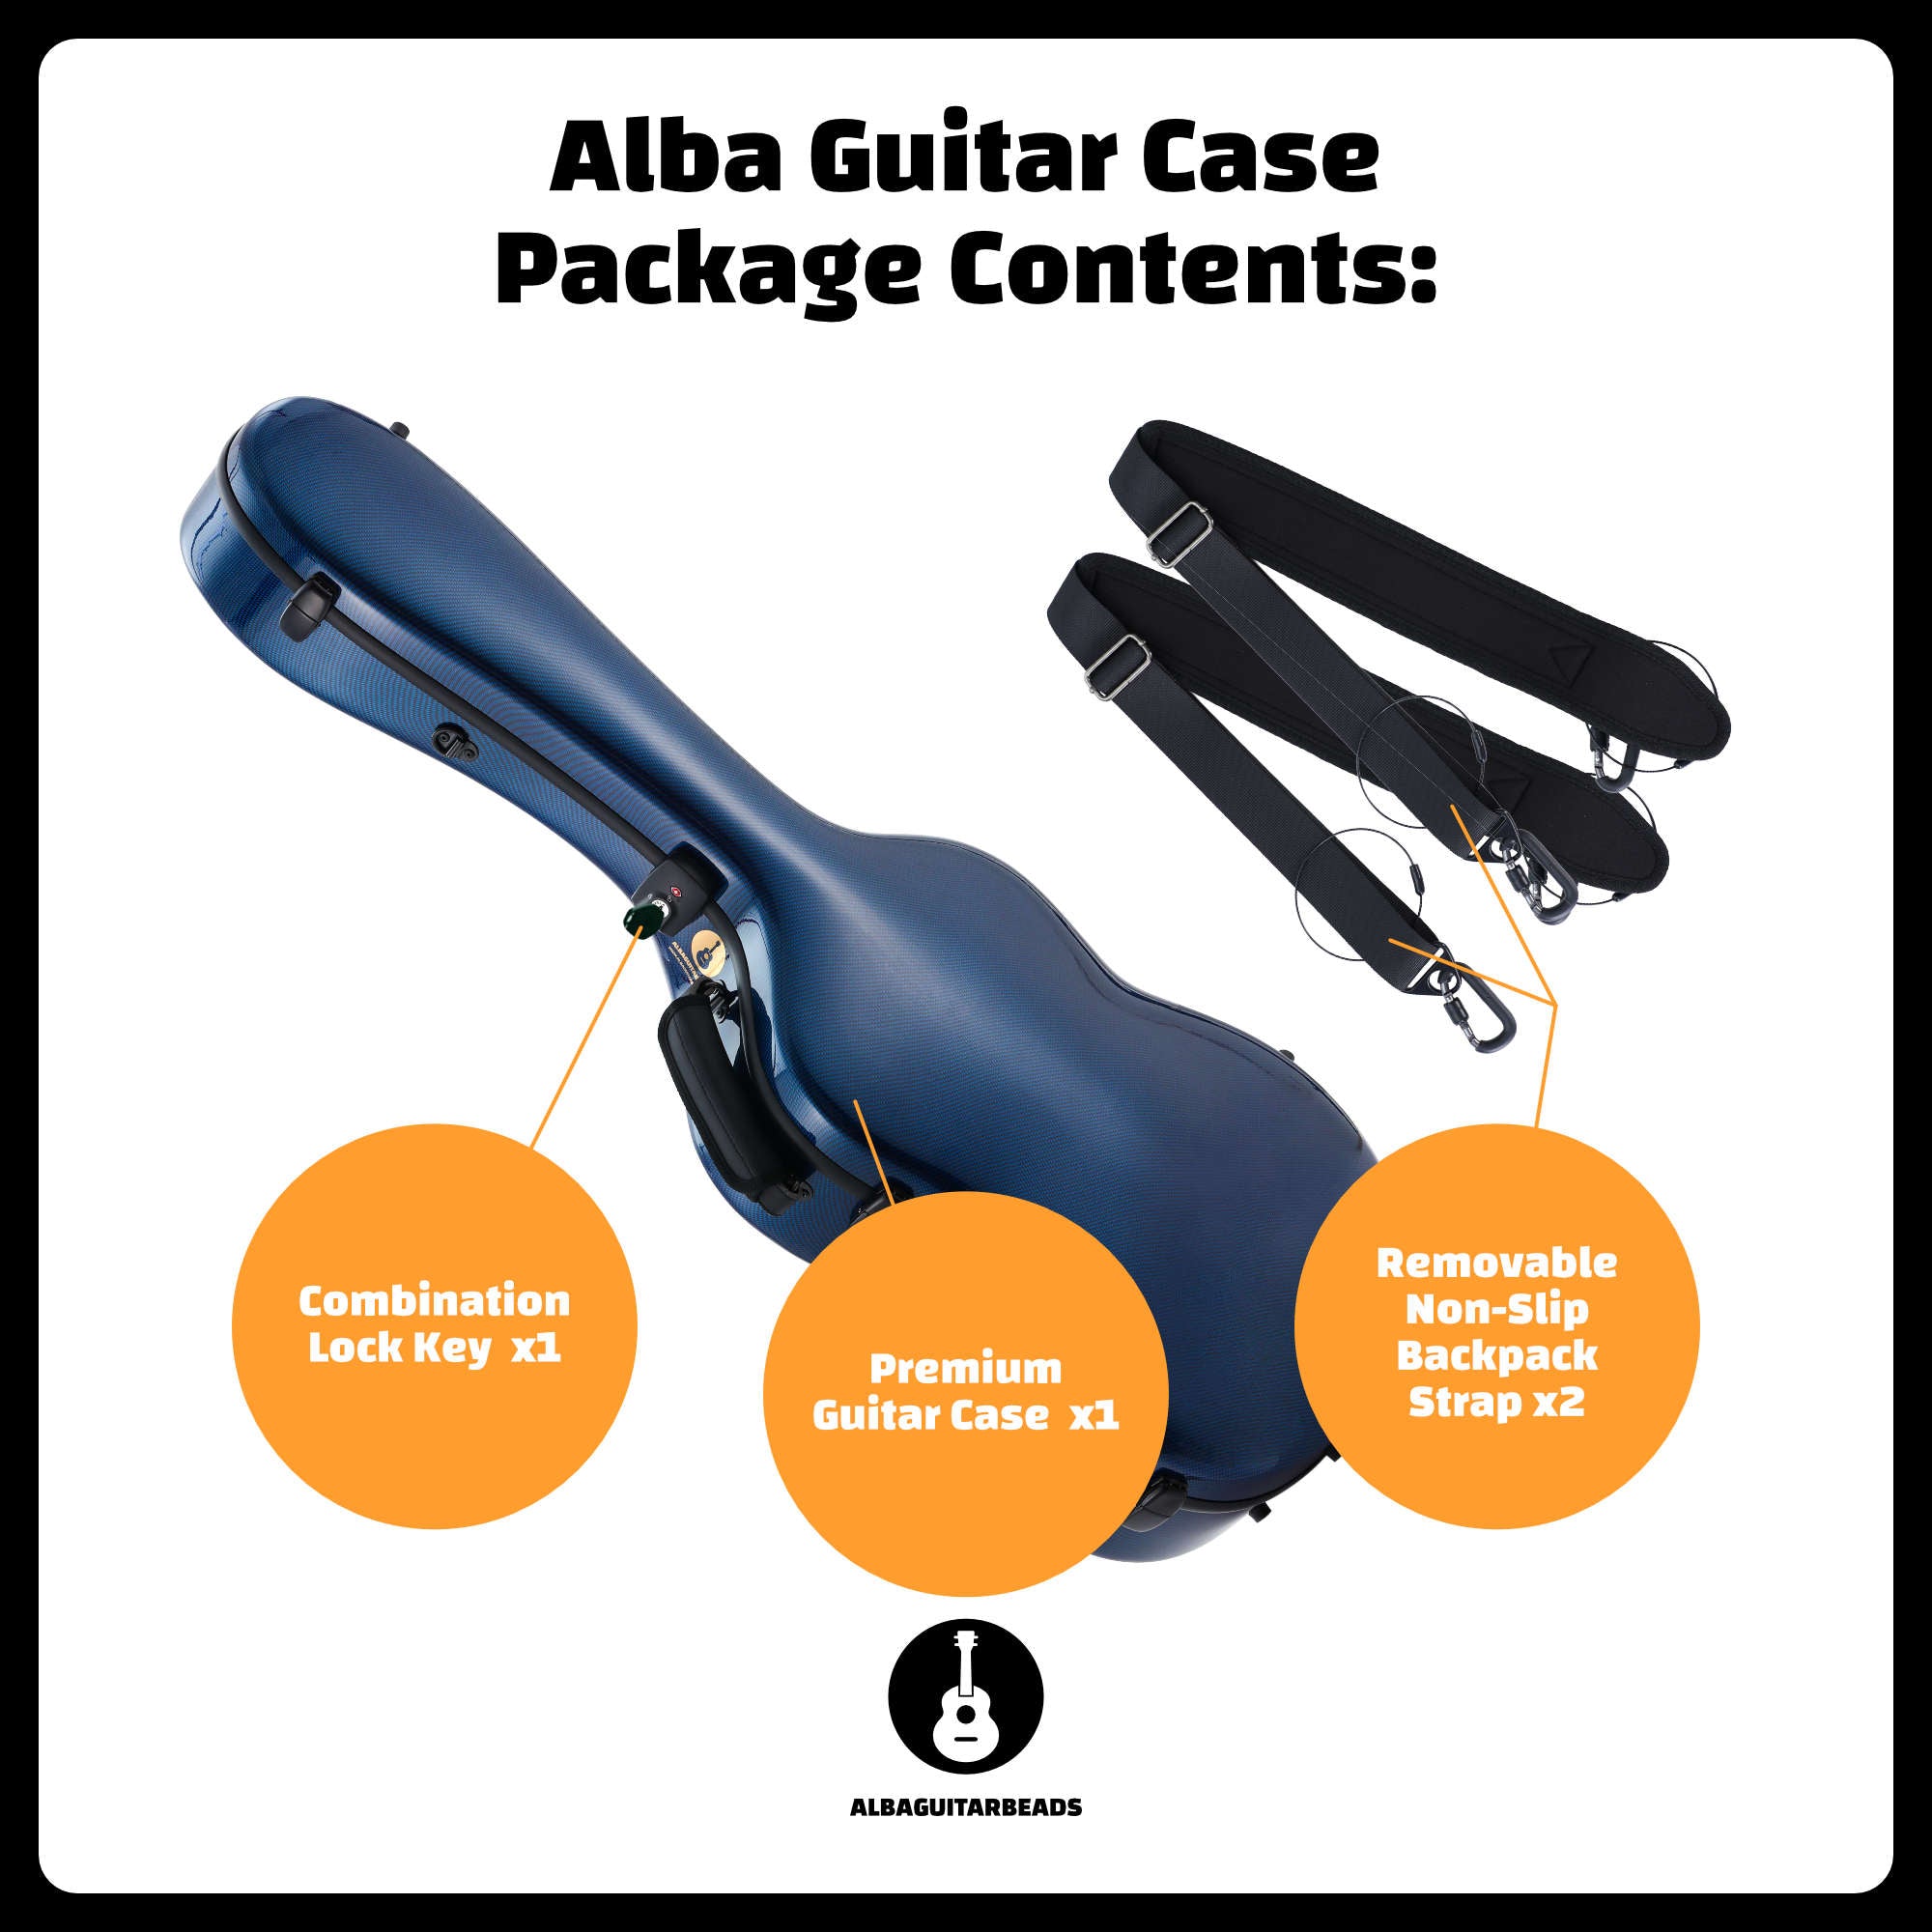 Alba Guitar Beads Case Blue Carbon Pattern Gloss für klassische Gitarre, Akustikgitarre, Flamenco-Gitarrenkoffer